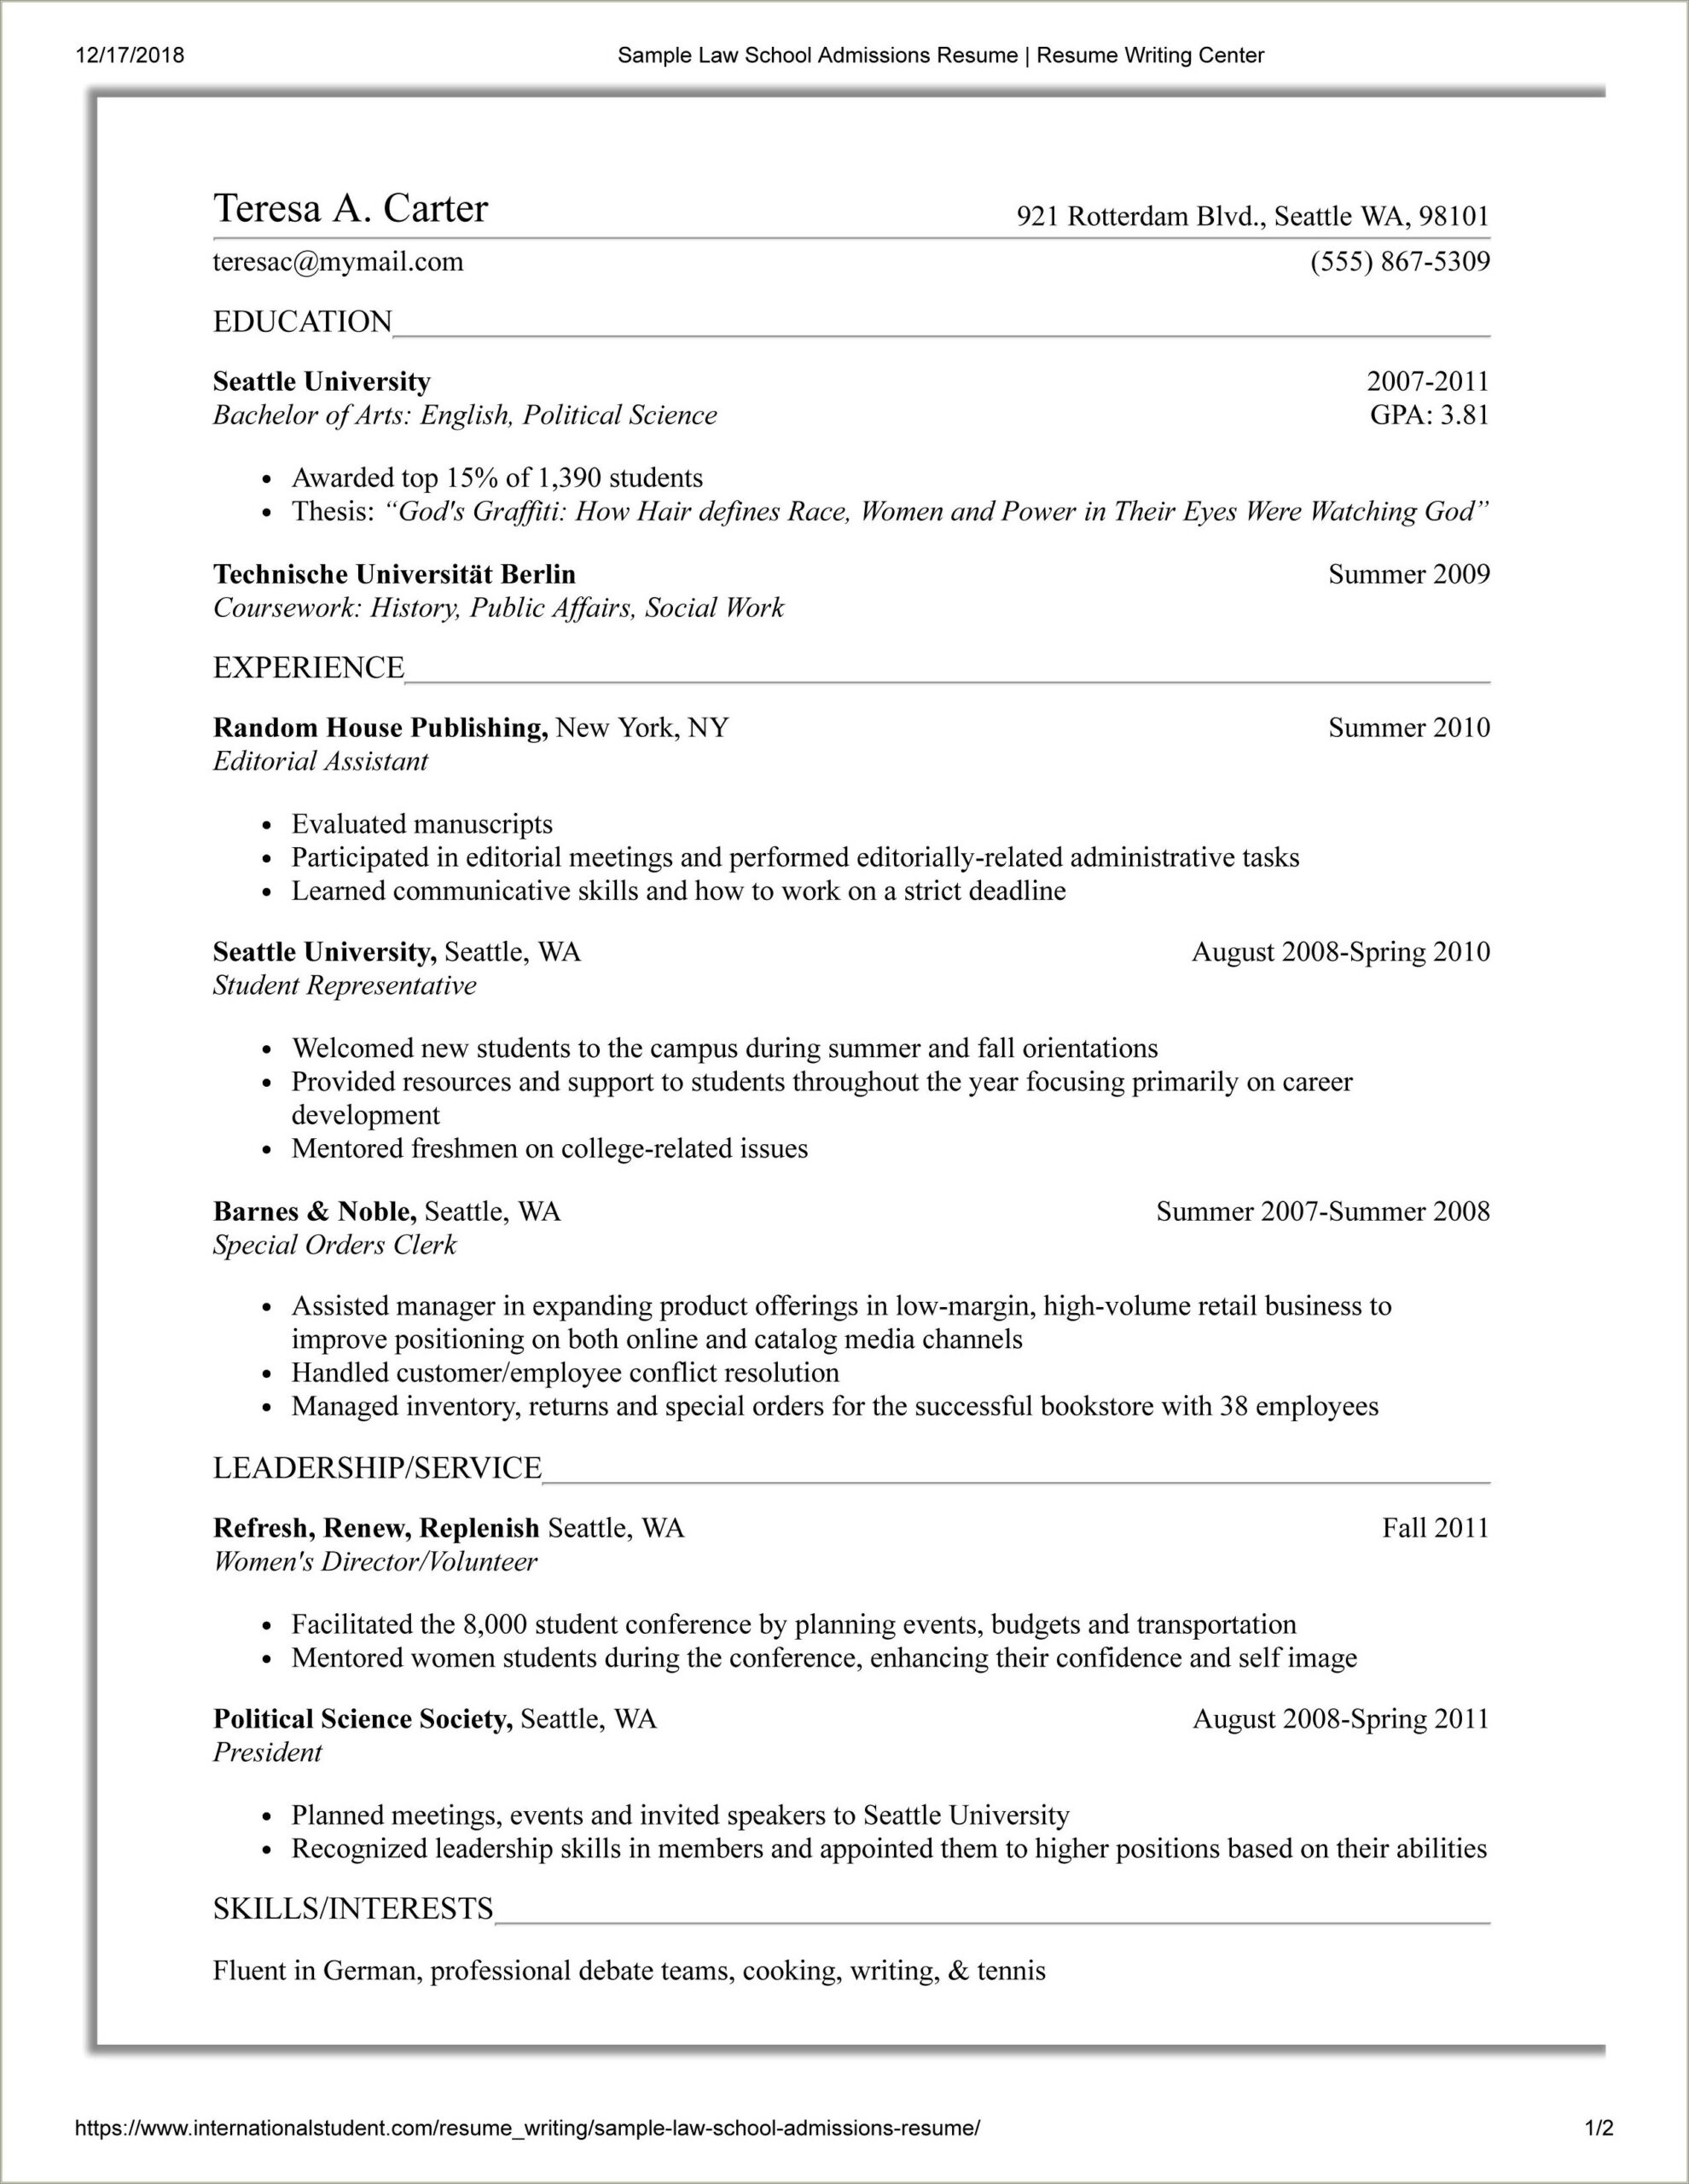 Sample Resume For Law School Graduate